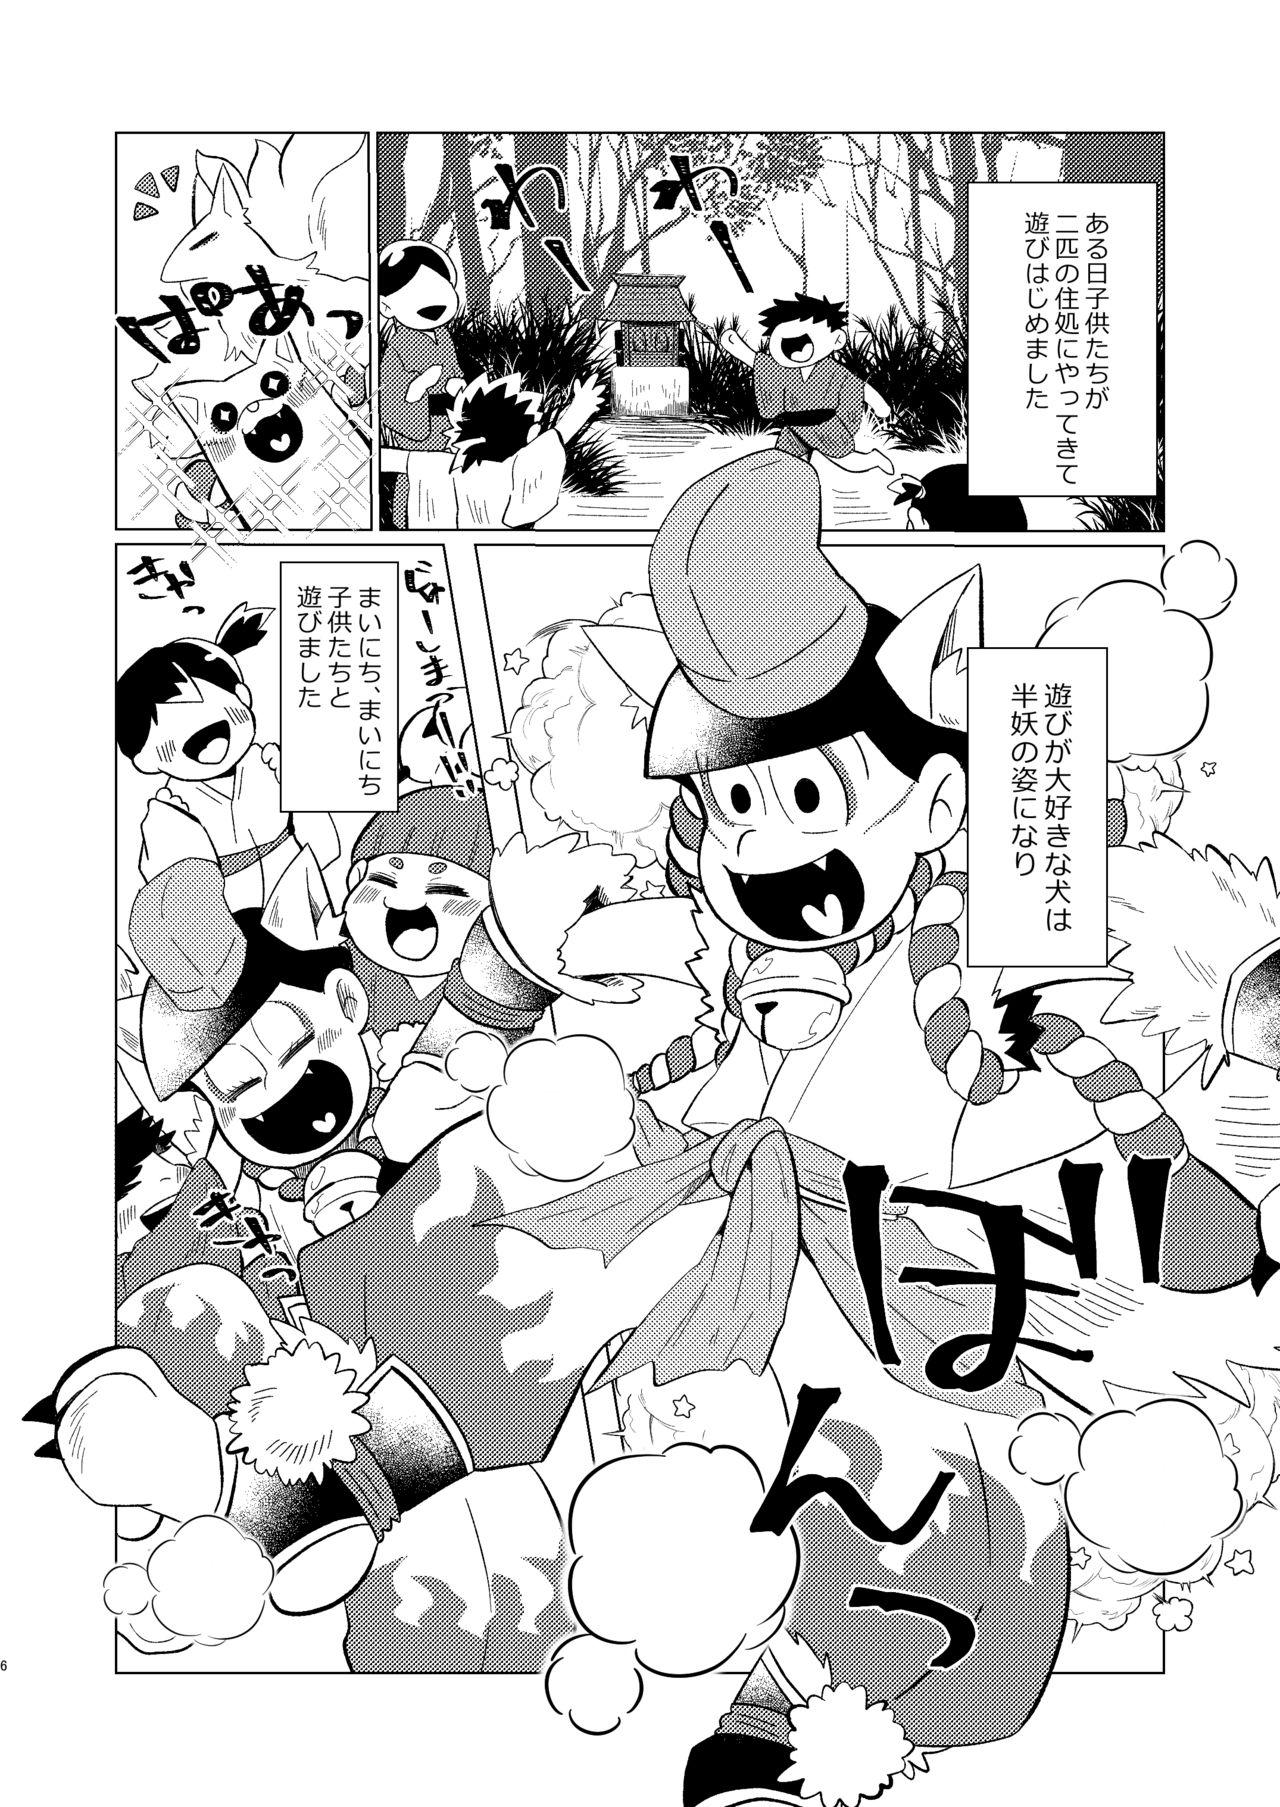 Shoplifter Megure, Megure Rinne no Hate e - Osomatsu-san 4some - Page 4